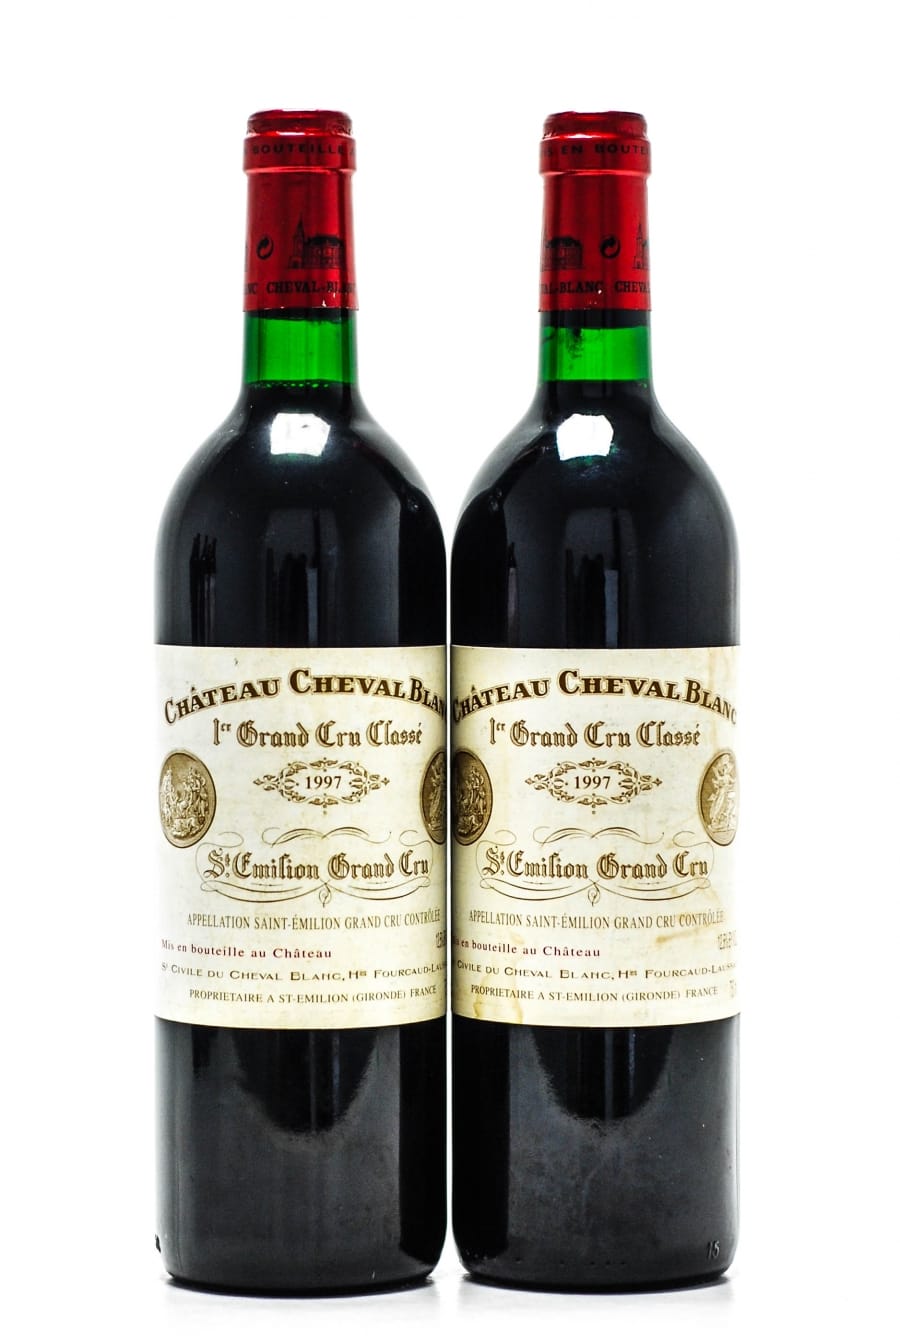 Chateau Cheval Blanc - Chateau Cheval Blanc 1997 perfect